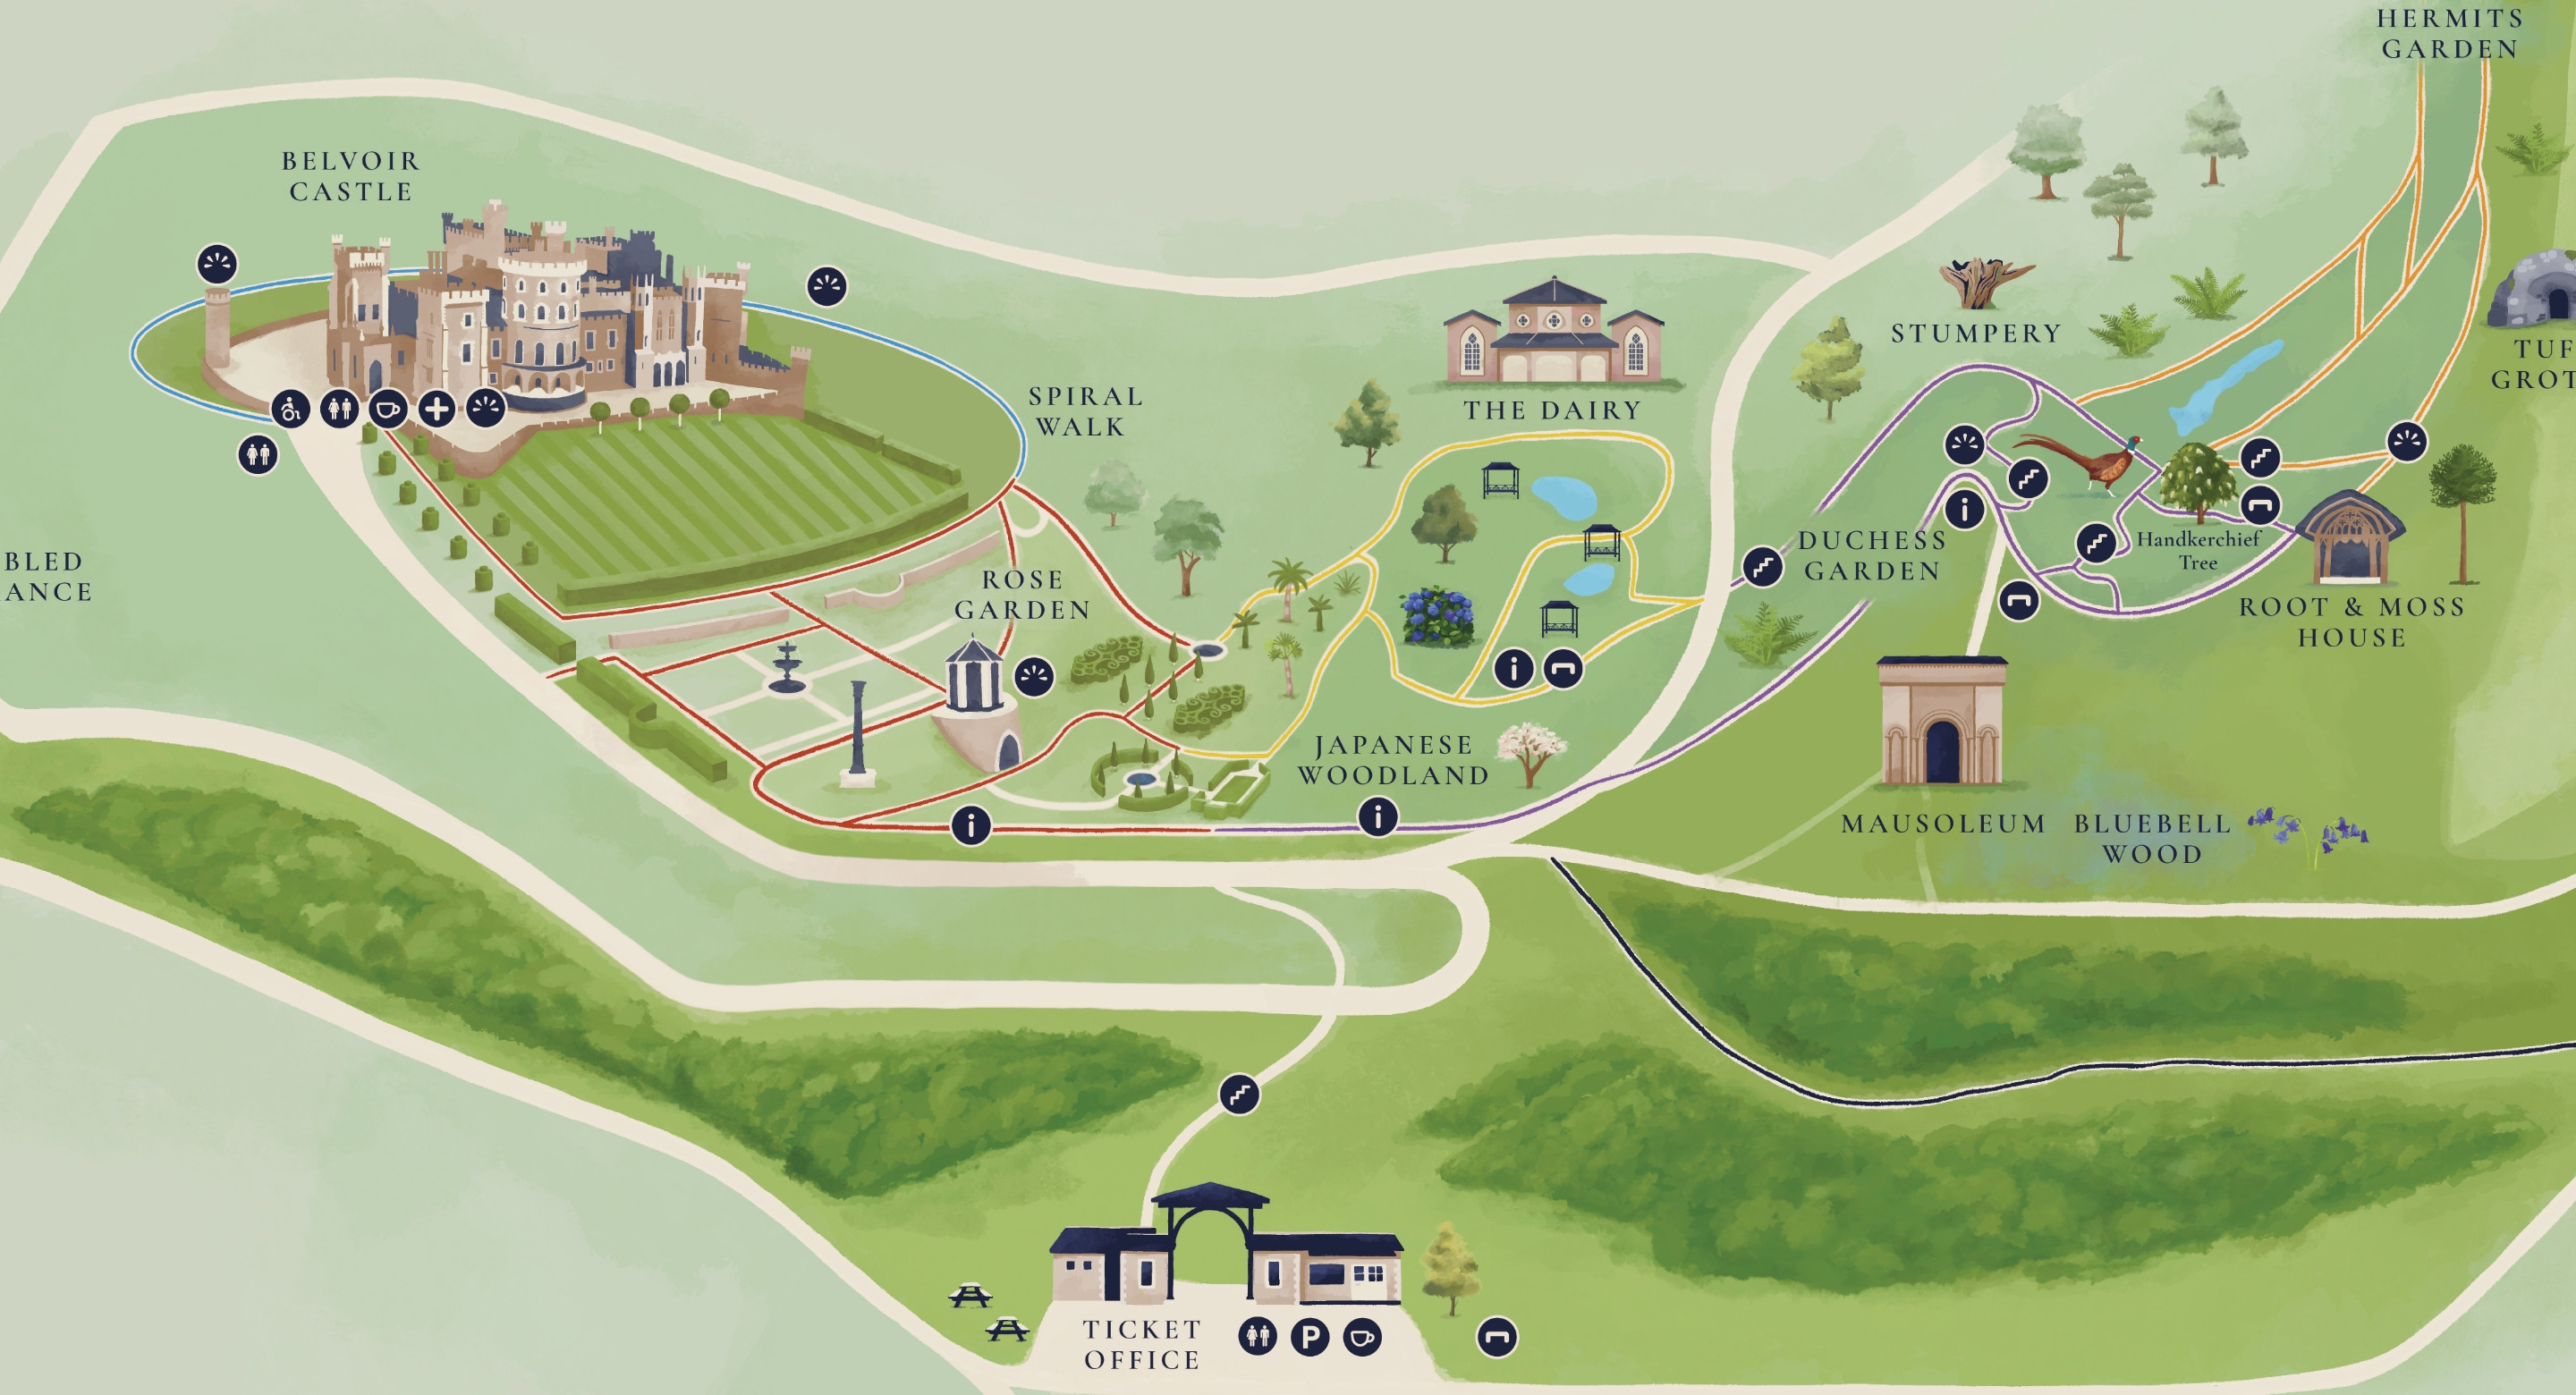 Belvoir Castle & Gardens illustrated map design by Root Studio